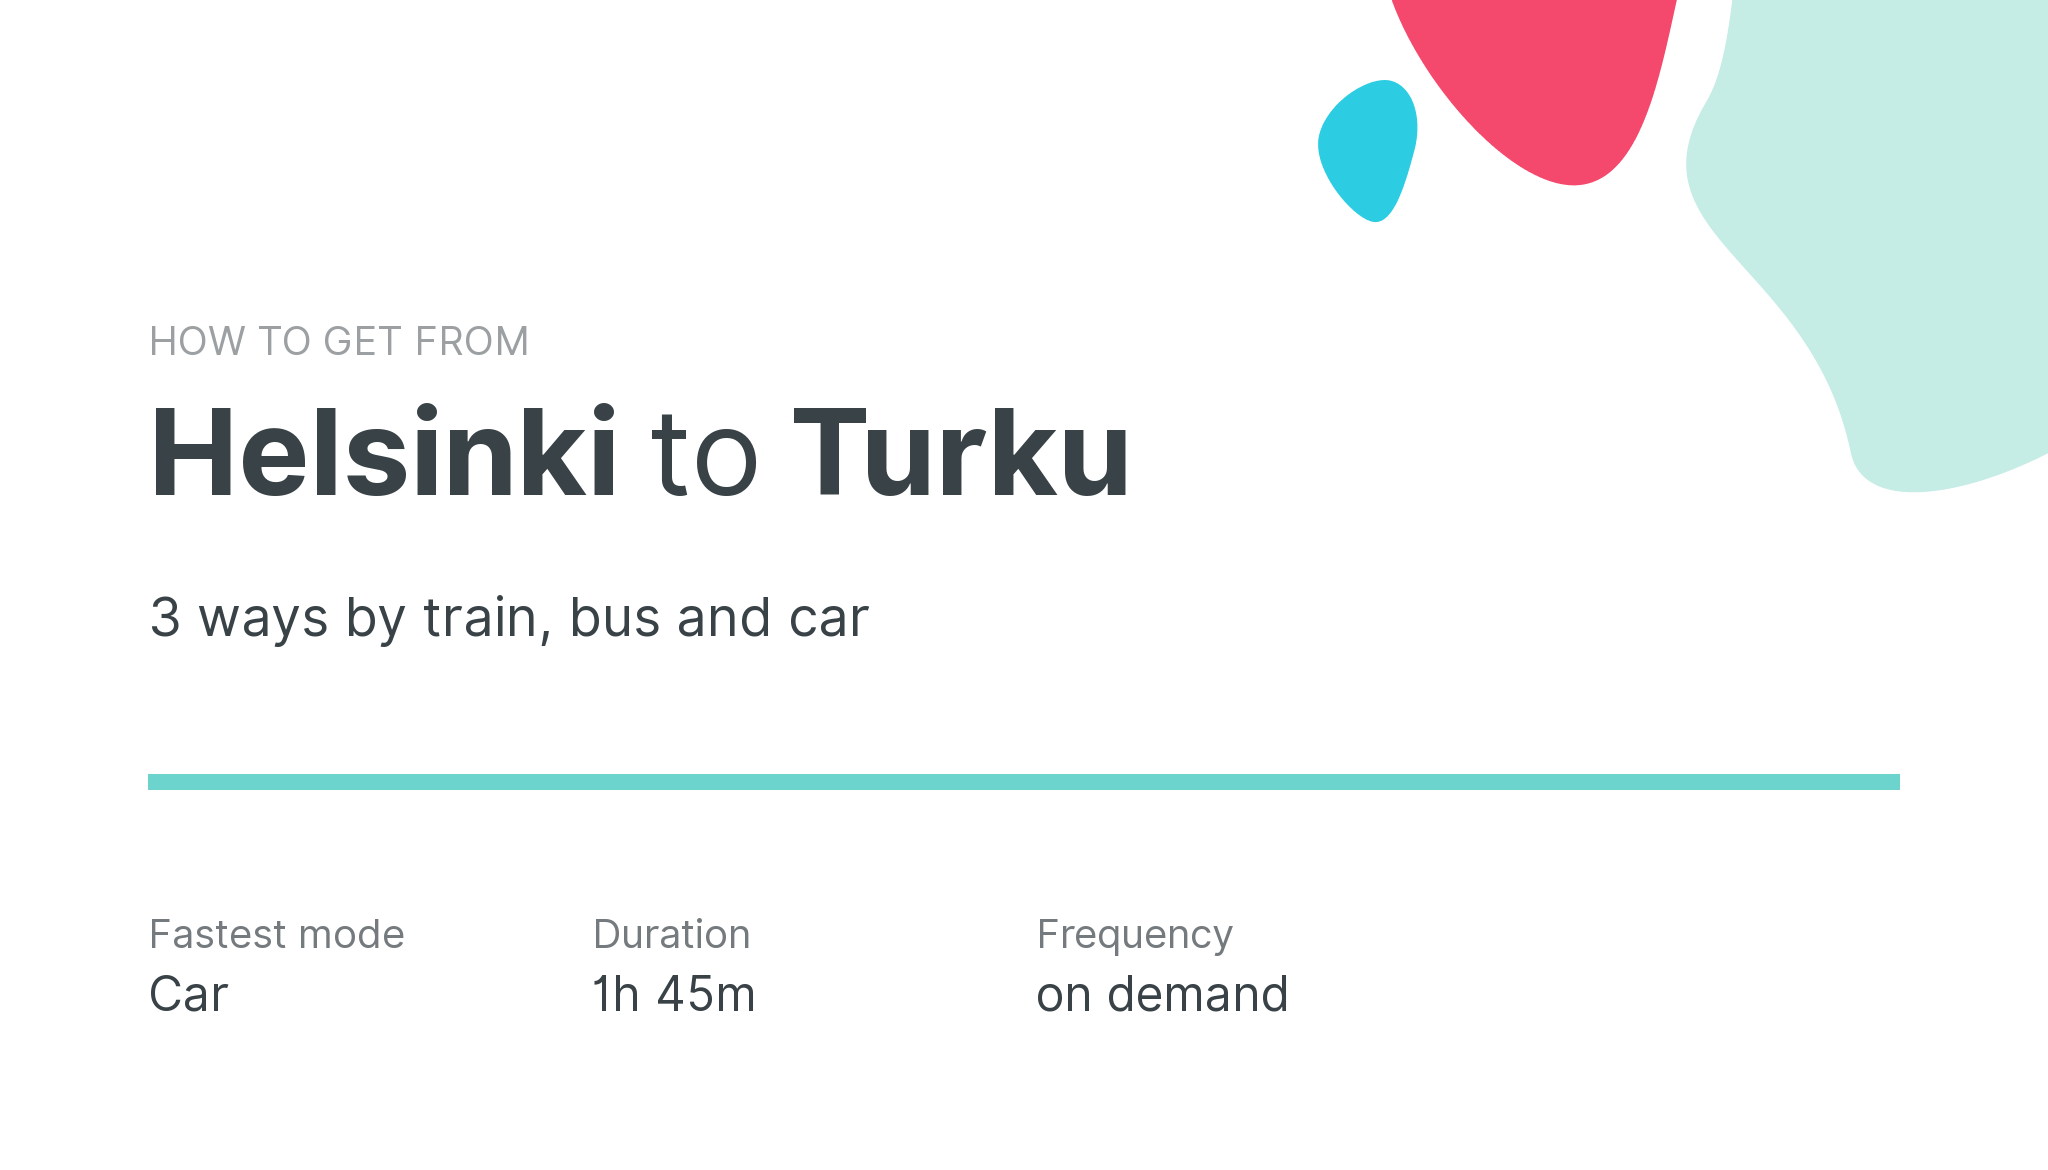 How do I get from Helsinki to Turku